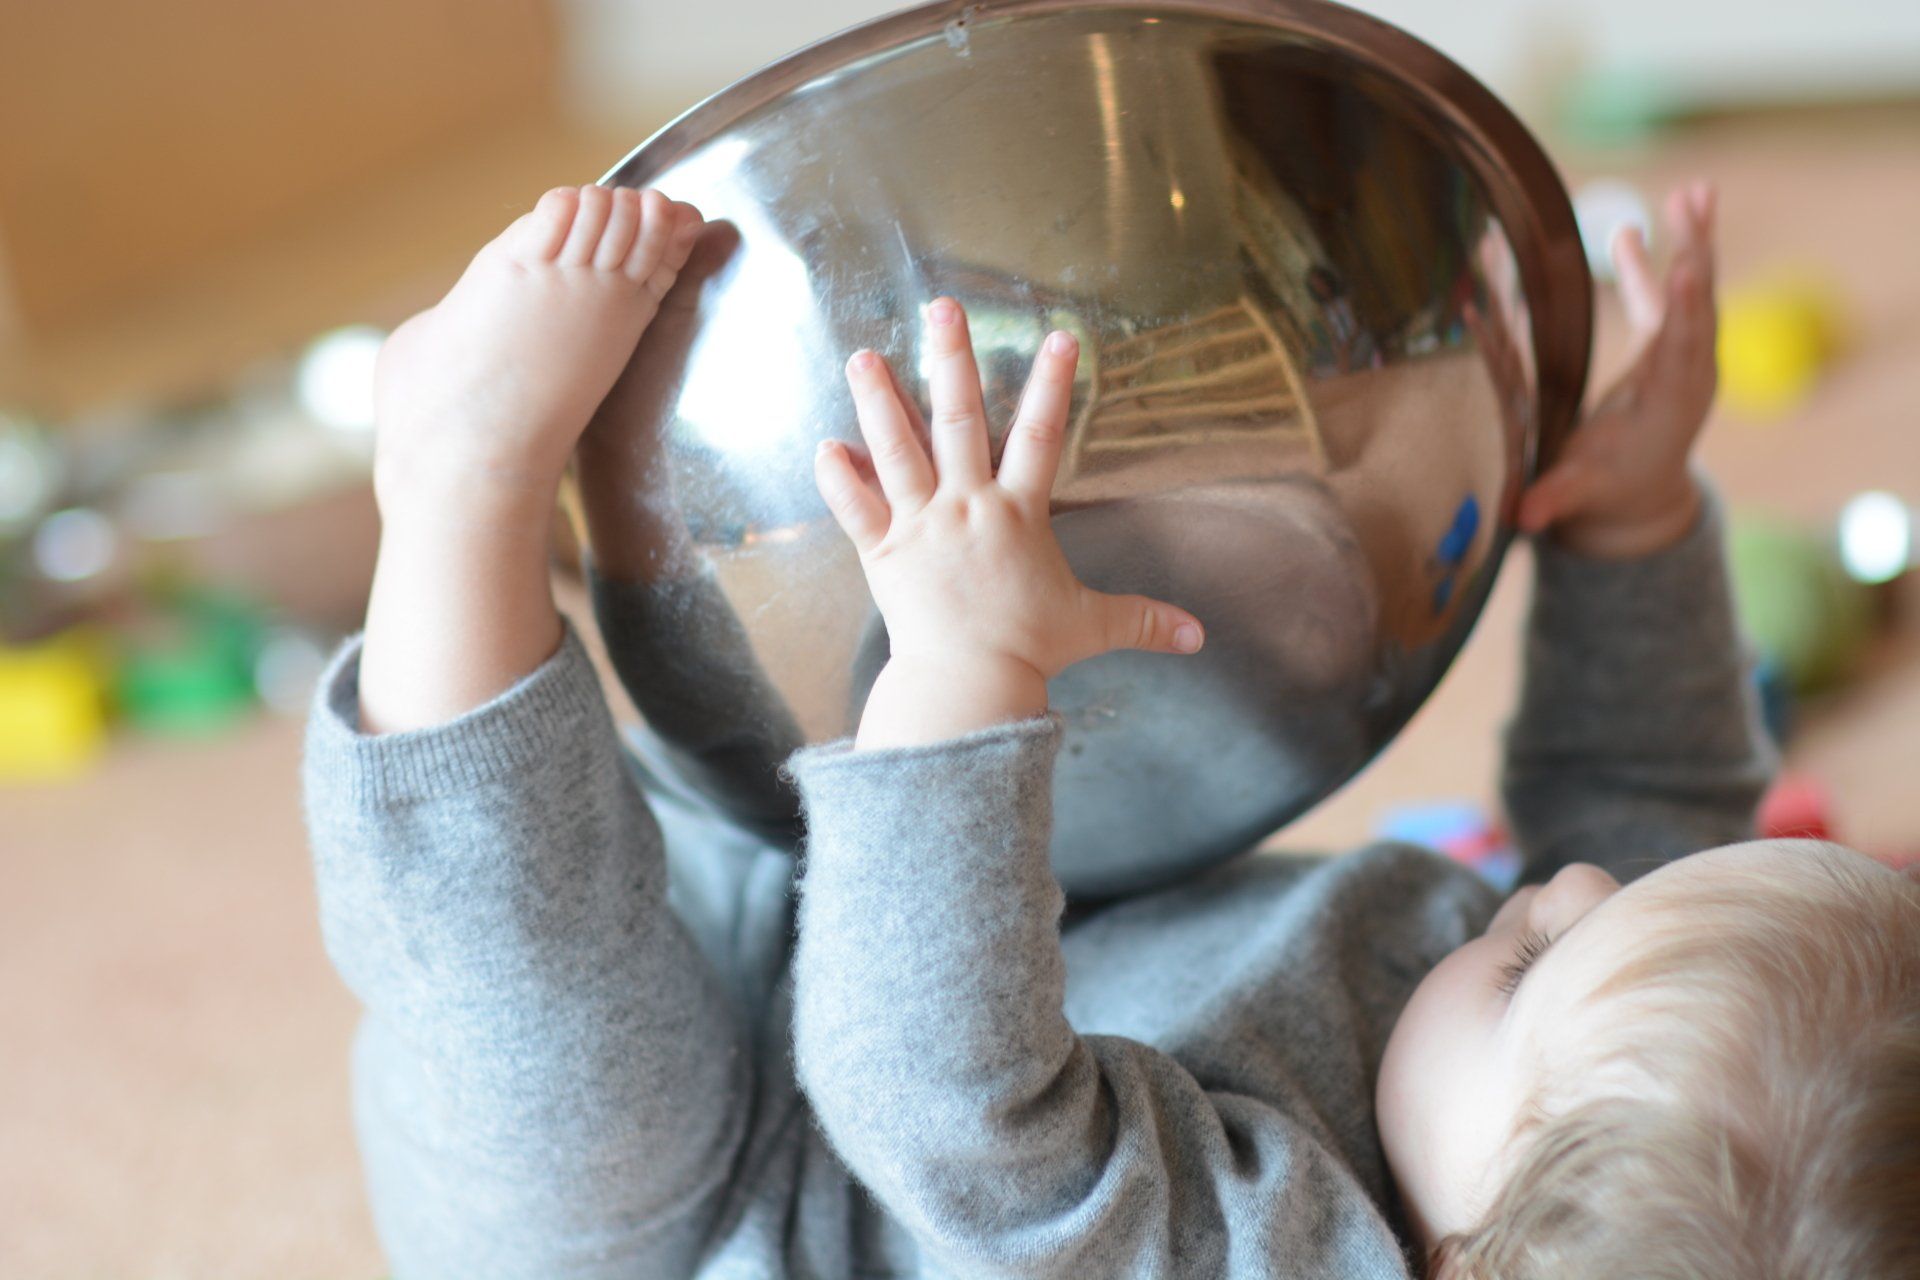 Infant holding a bowl